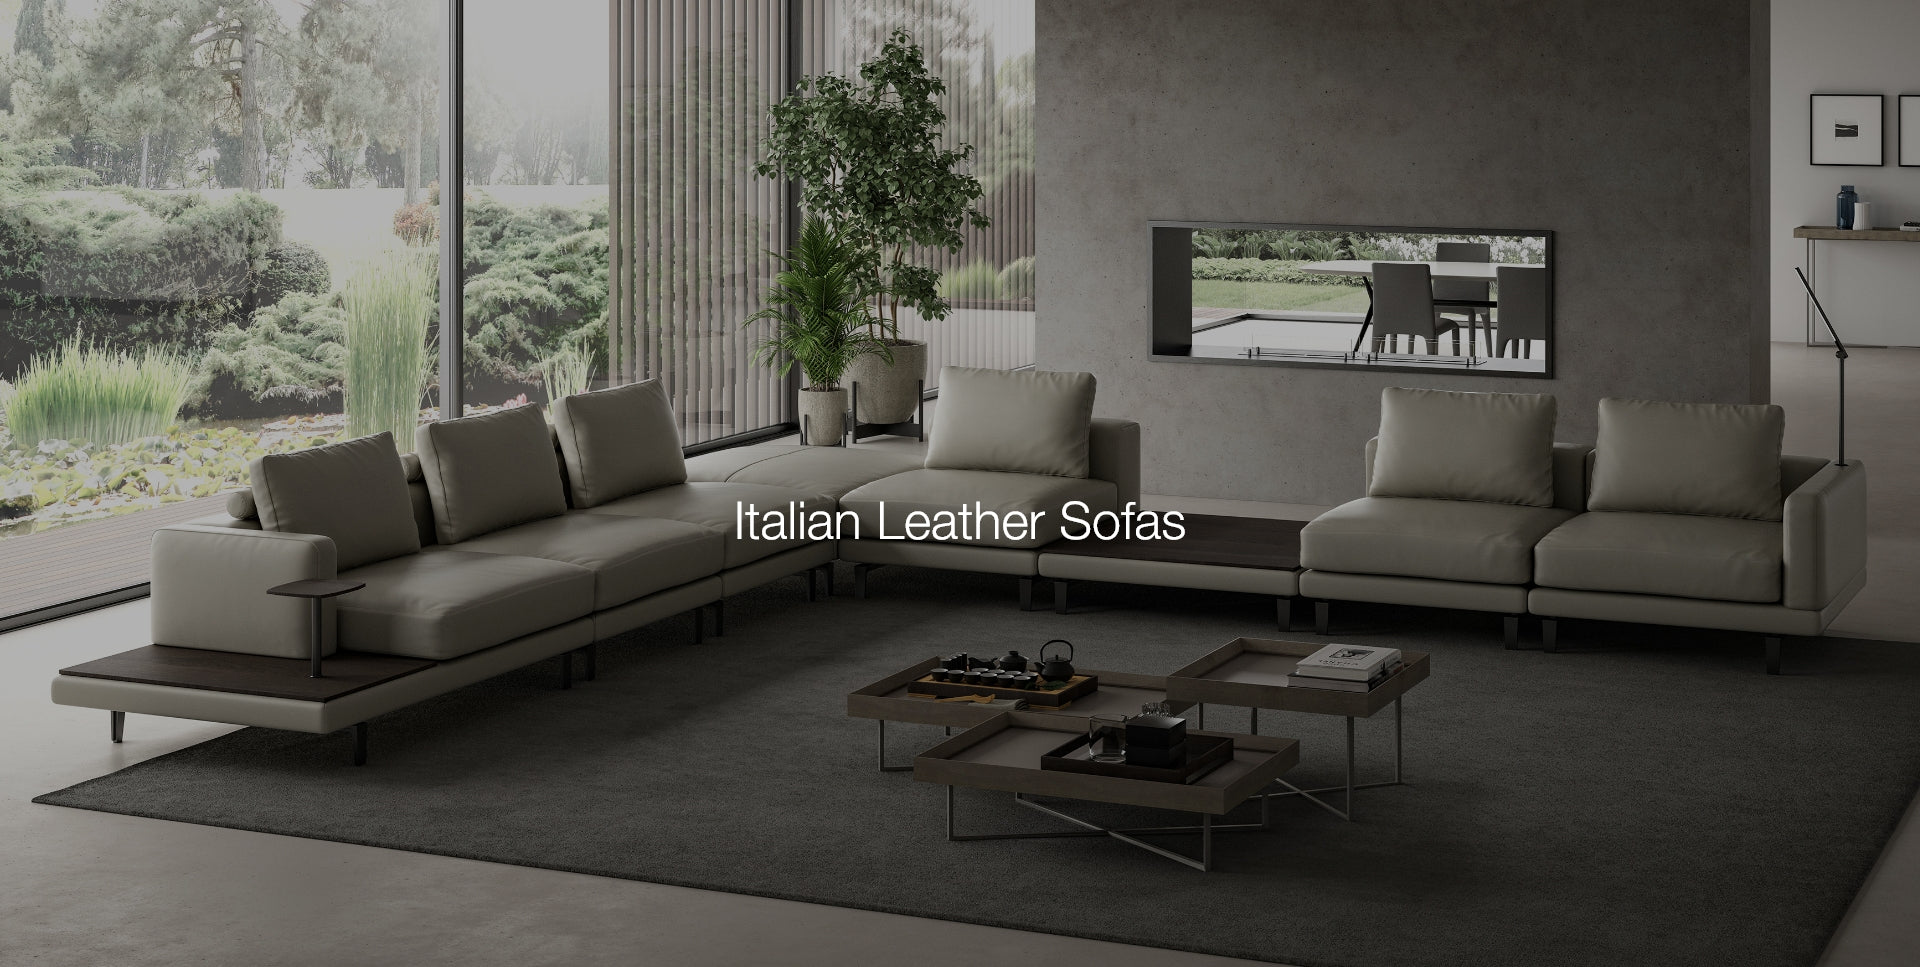 Italian Leather Sofas